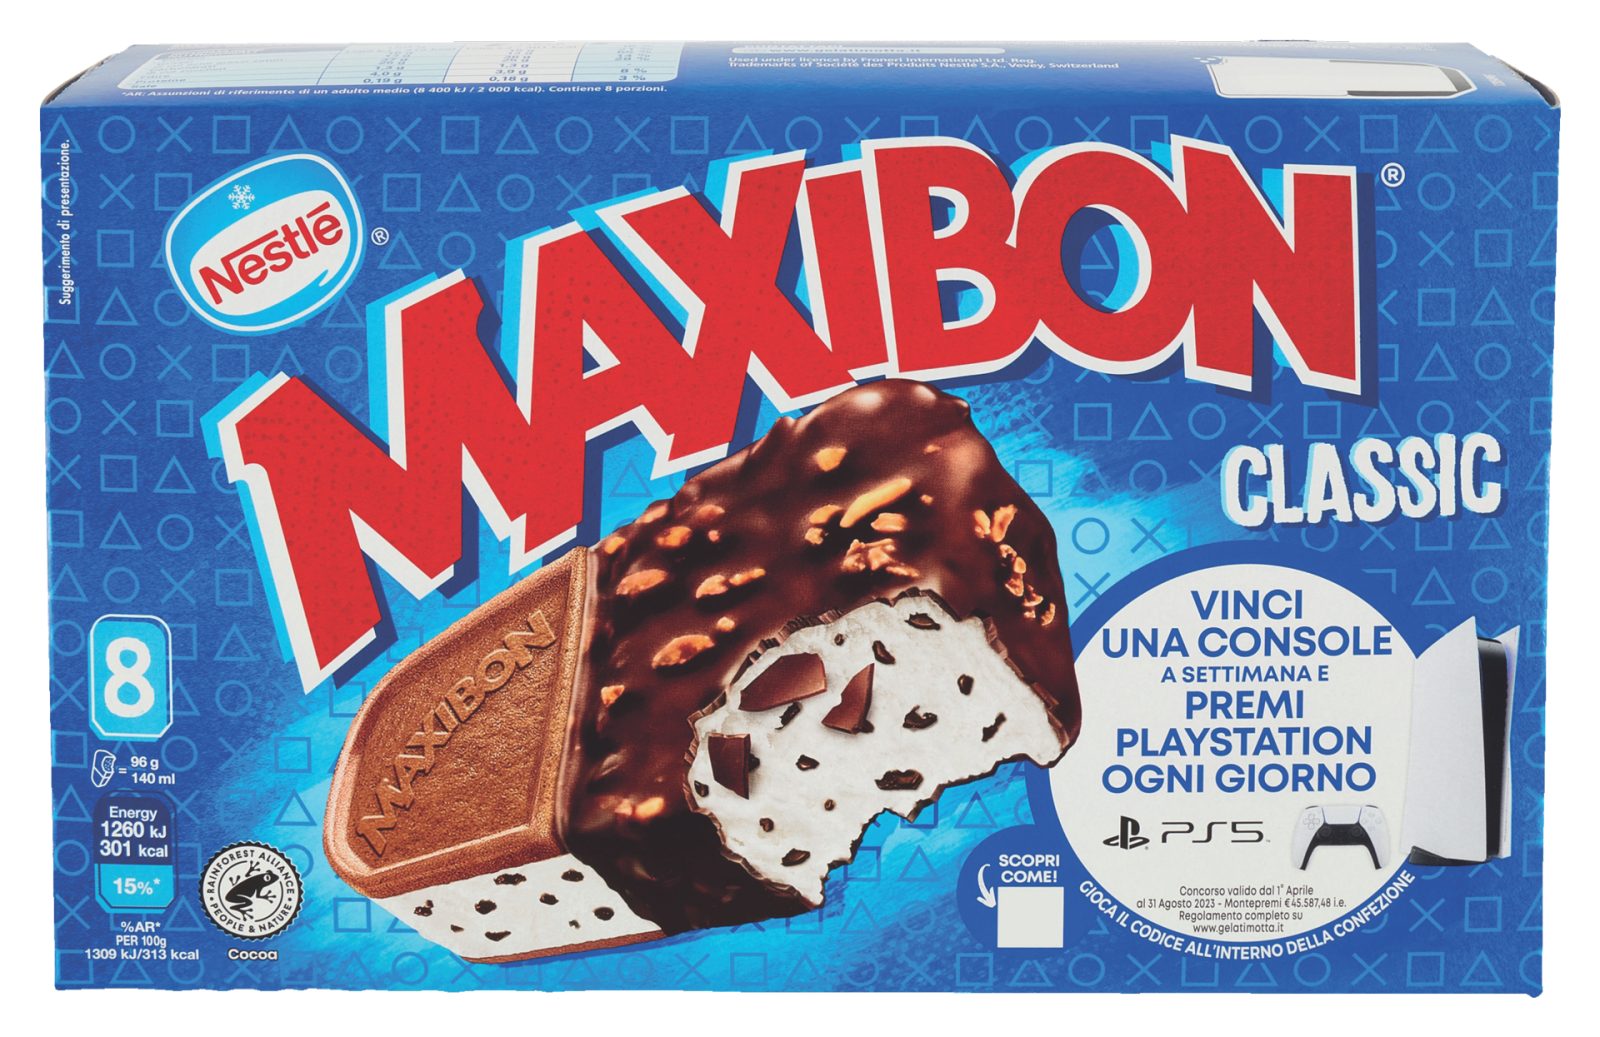 Maxibon Classic